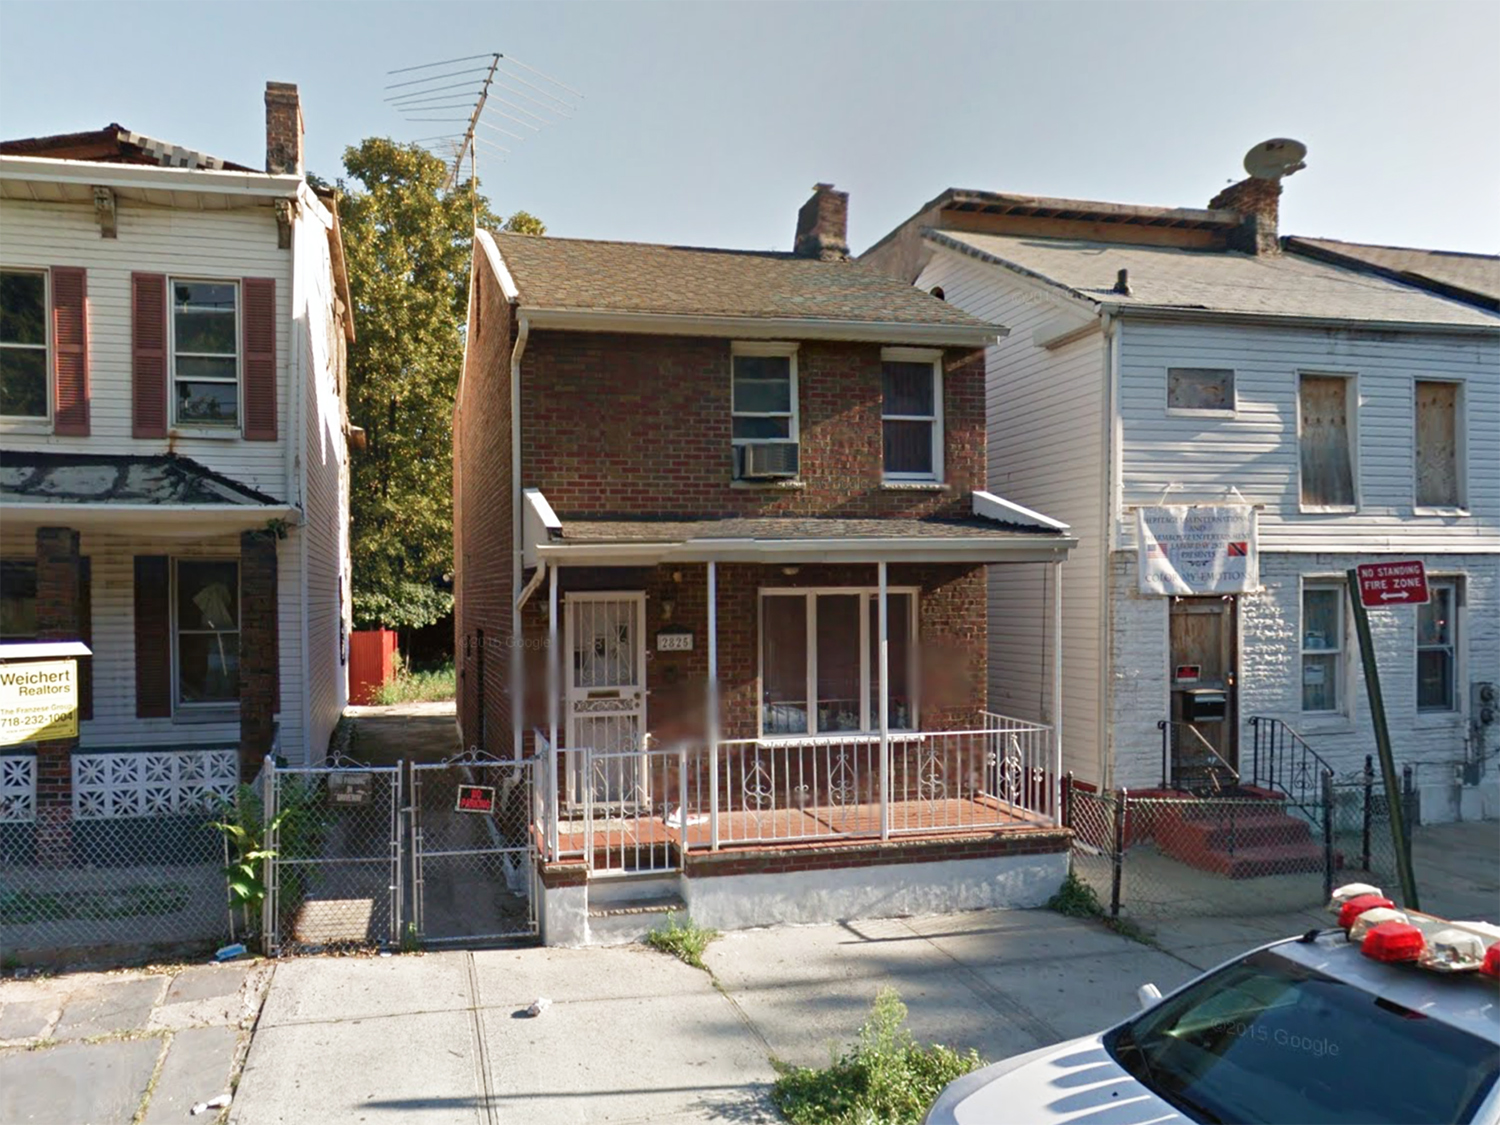 2825 Snyder Avenue. Via Google Maps.